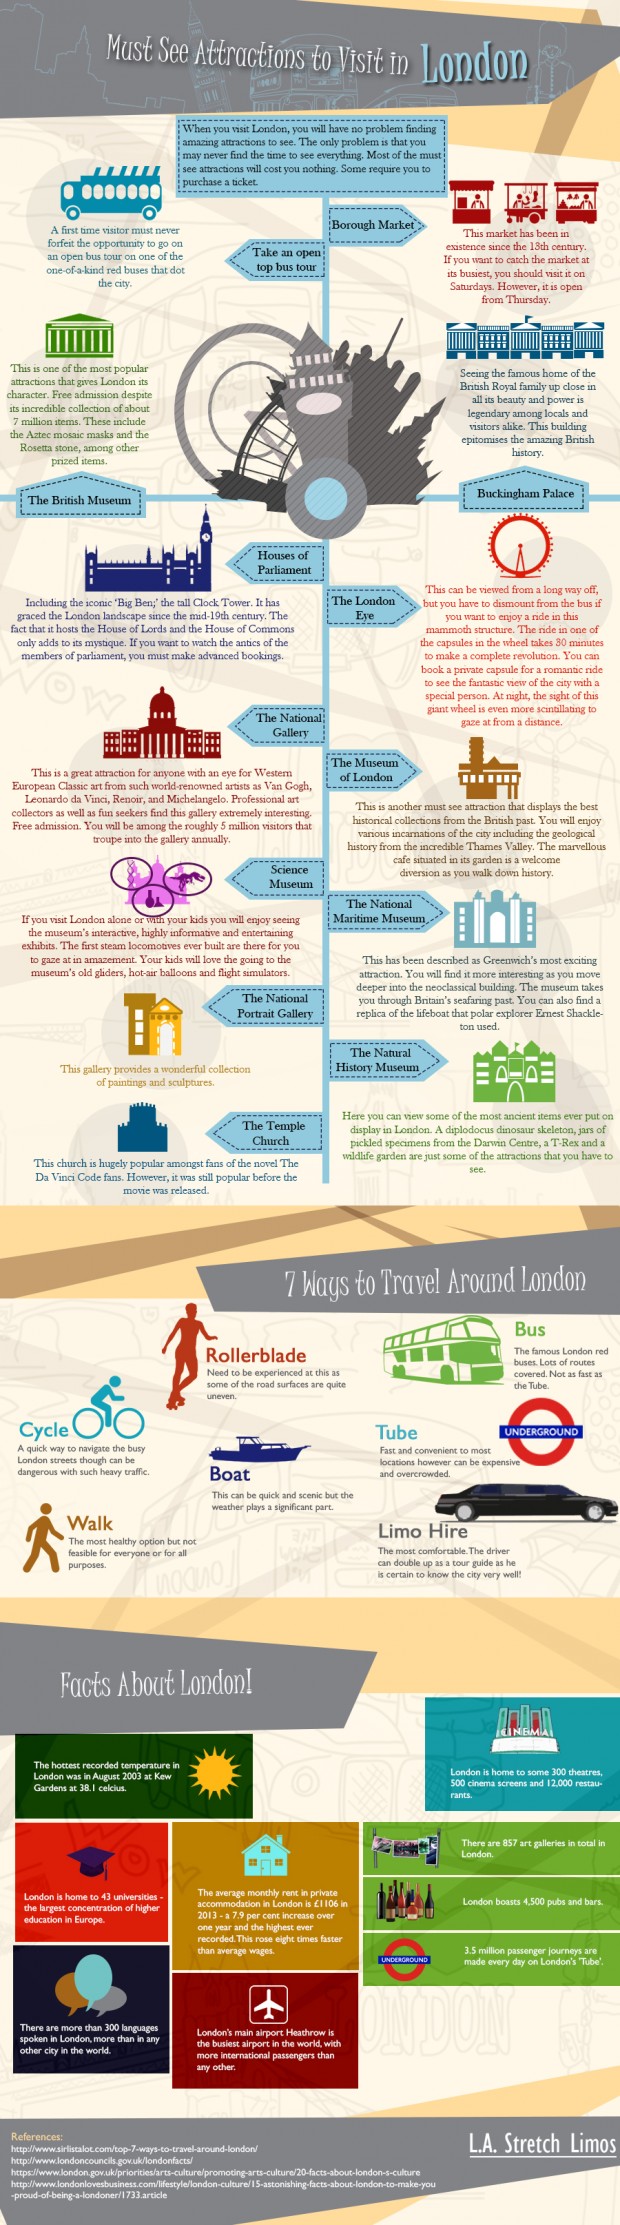 Top Must See London Attractions - AspirantSG